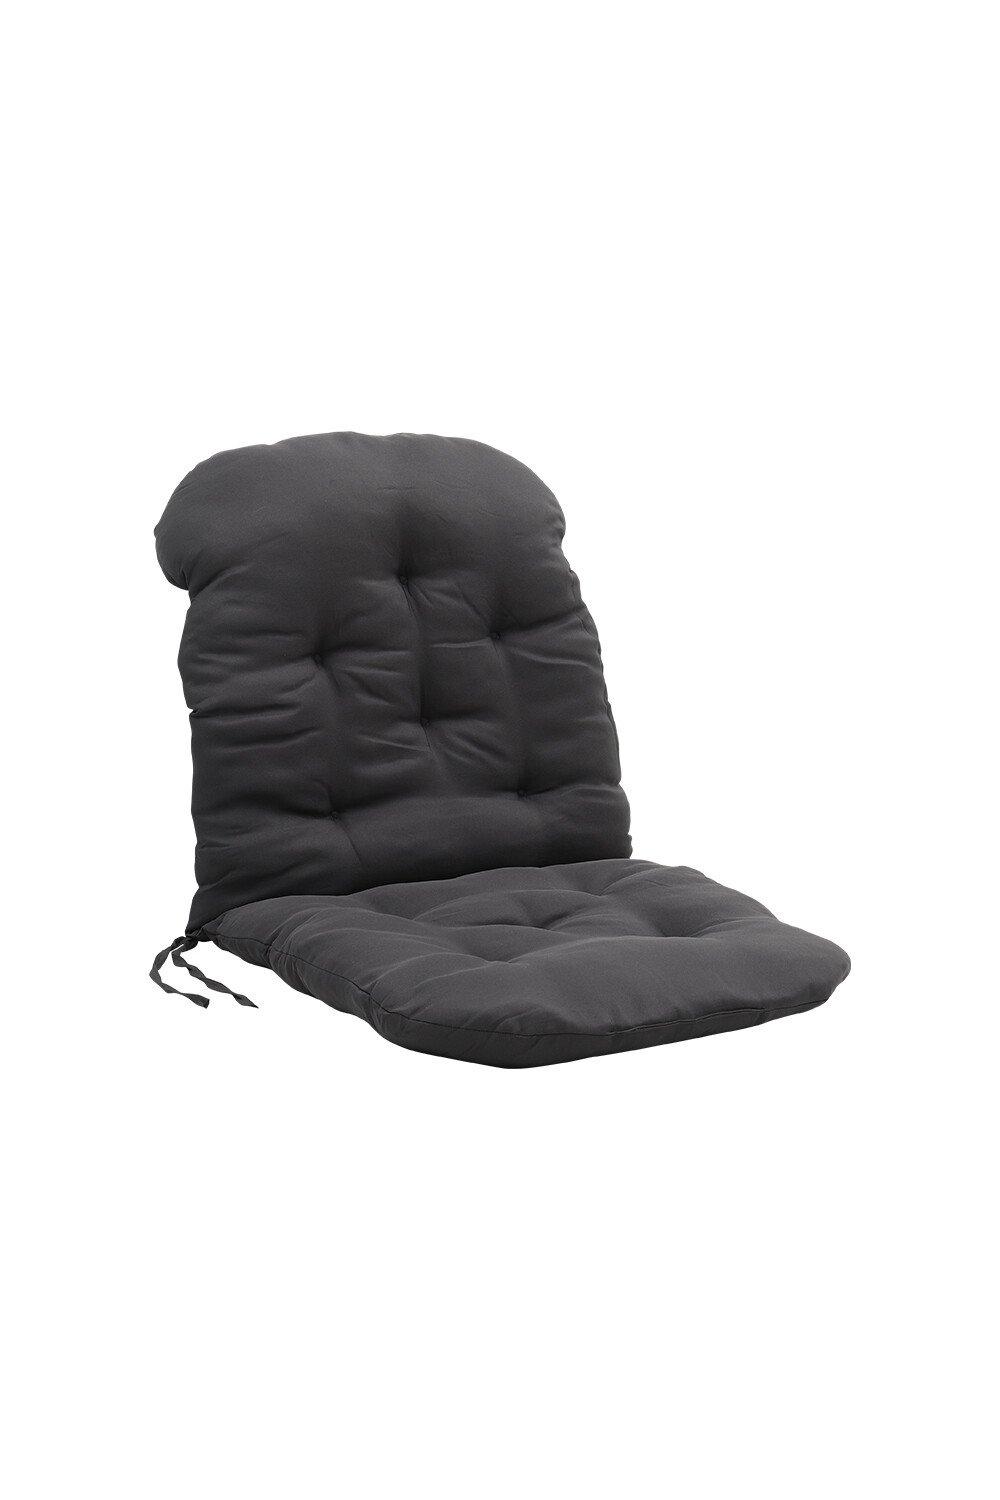 120*60cm Non-Slip Seat Cushion